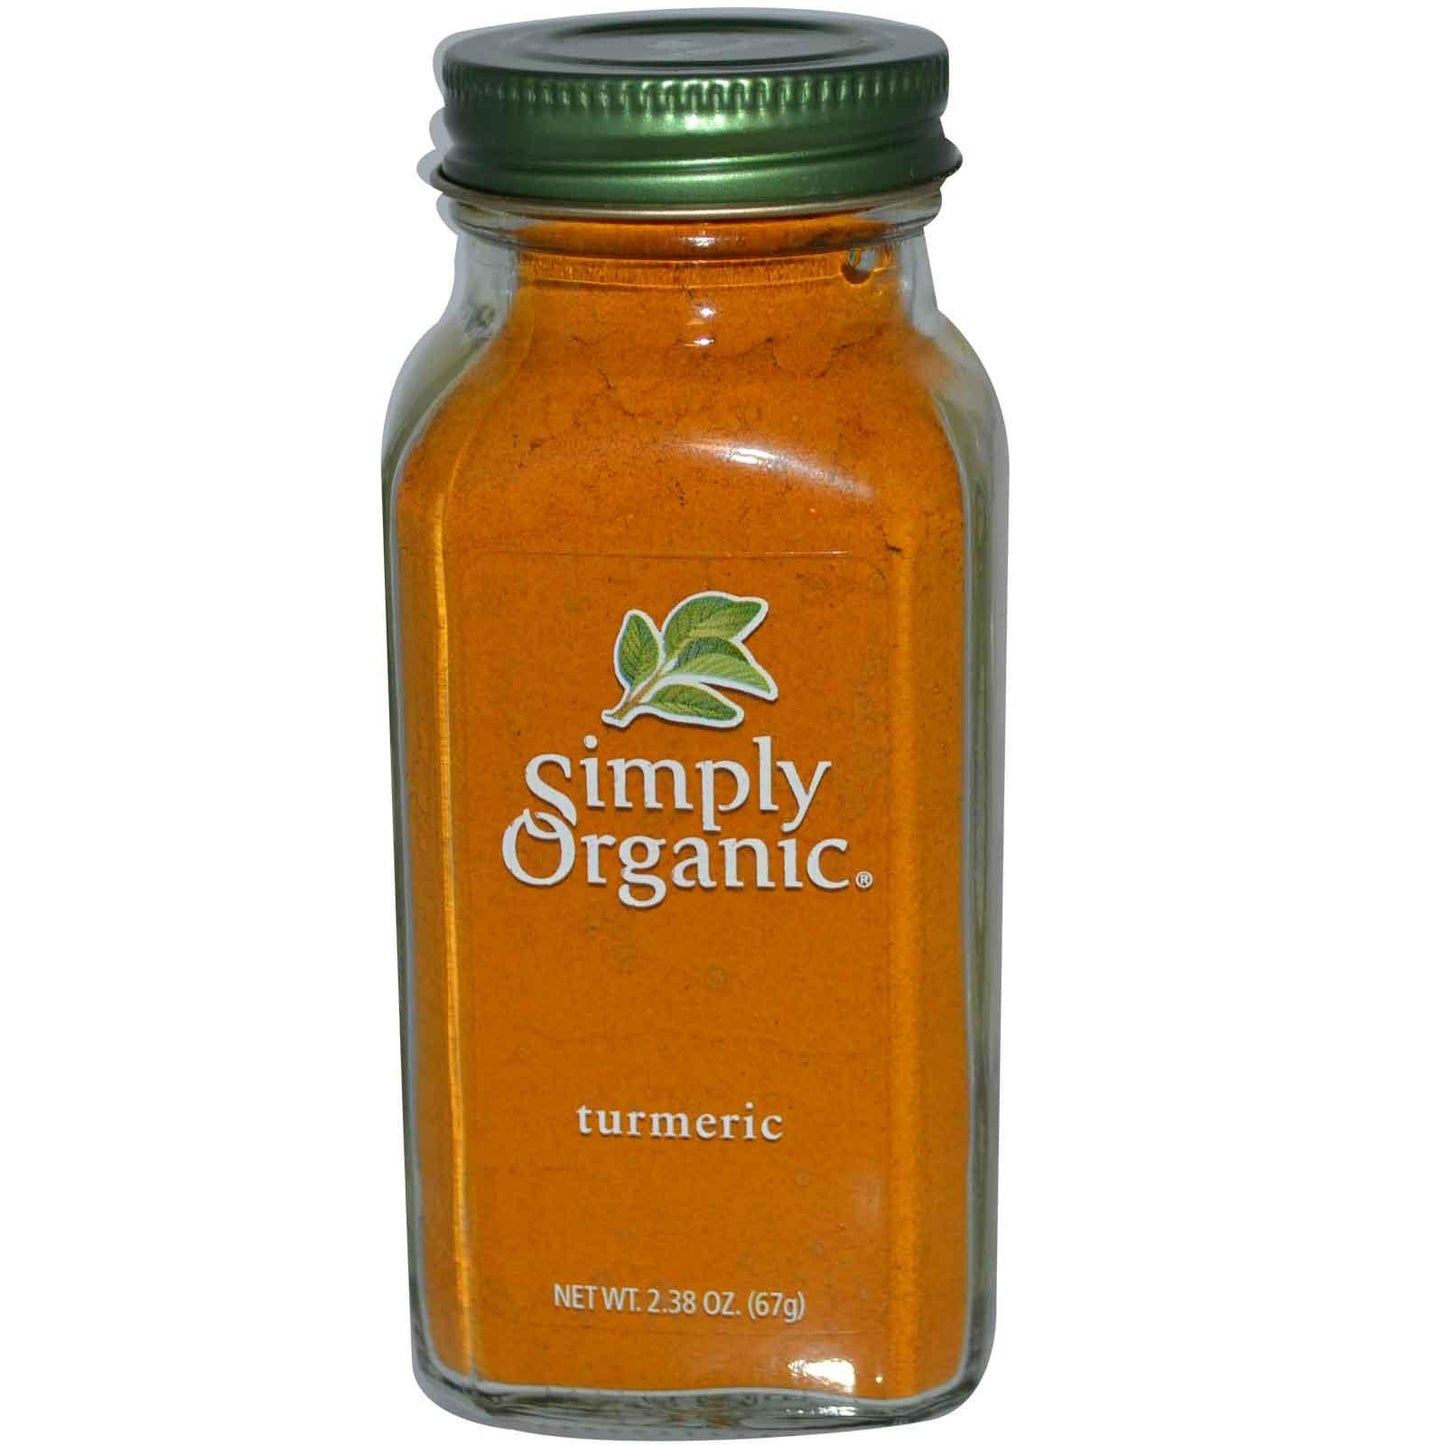 Simply Organic Tumeric 67g